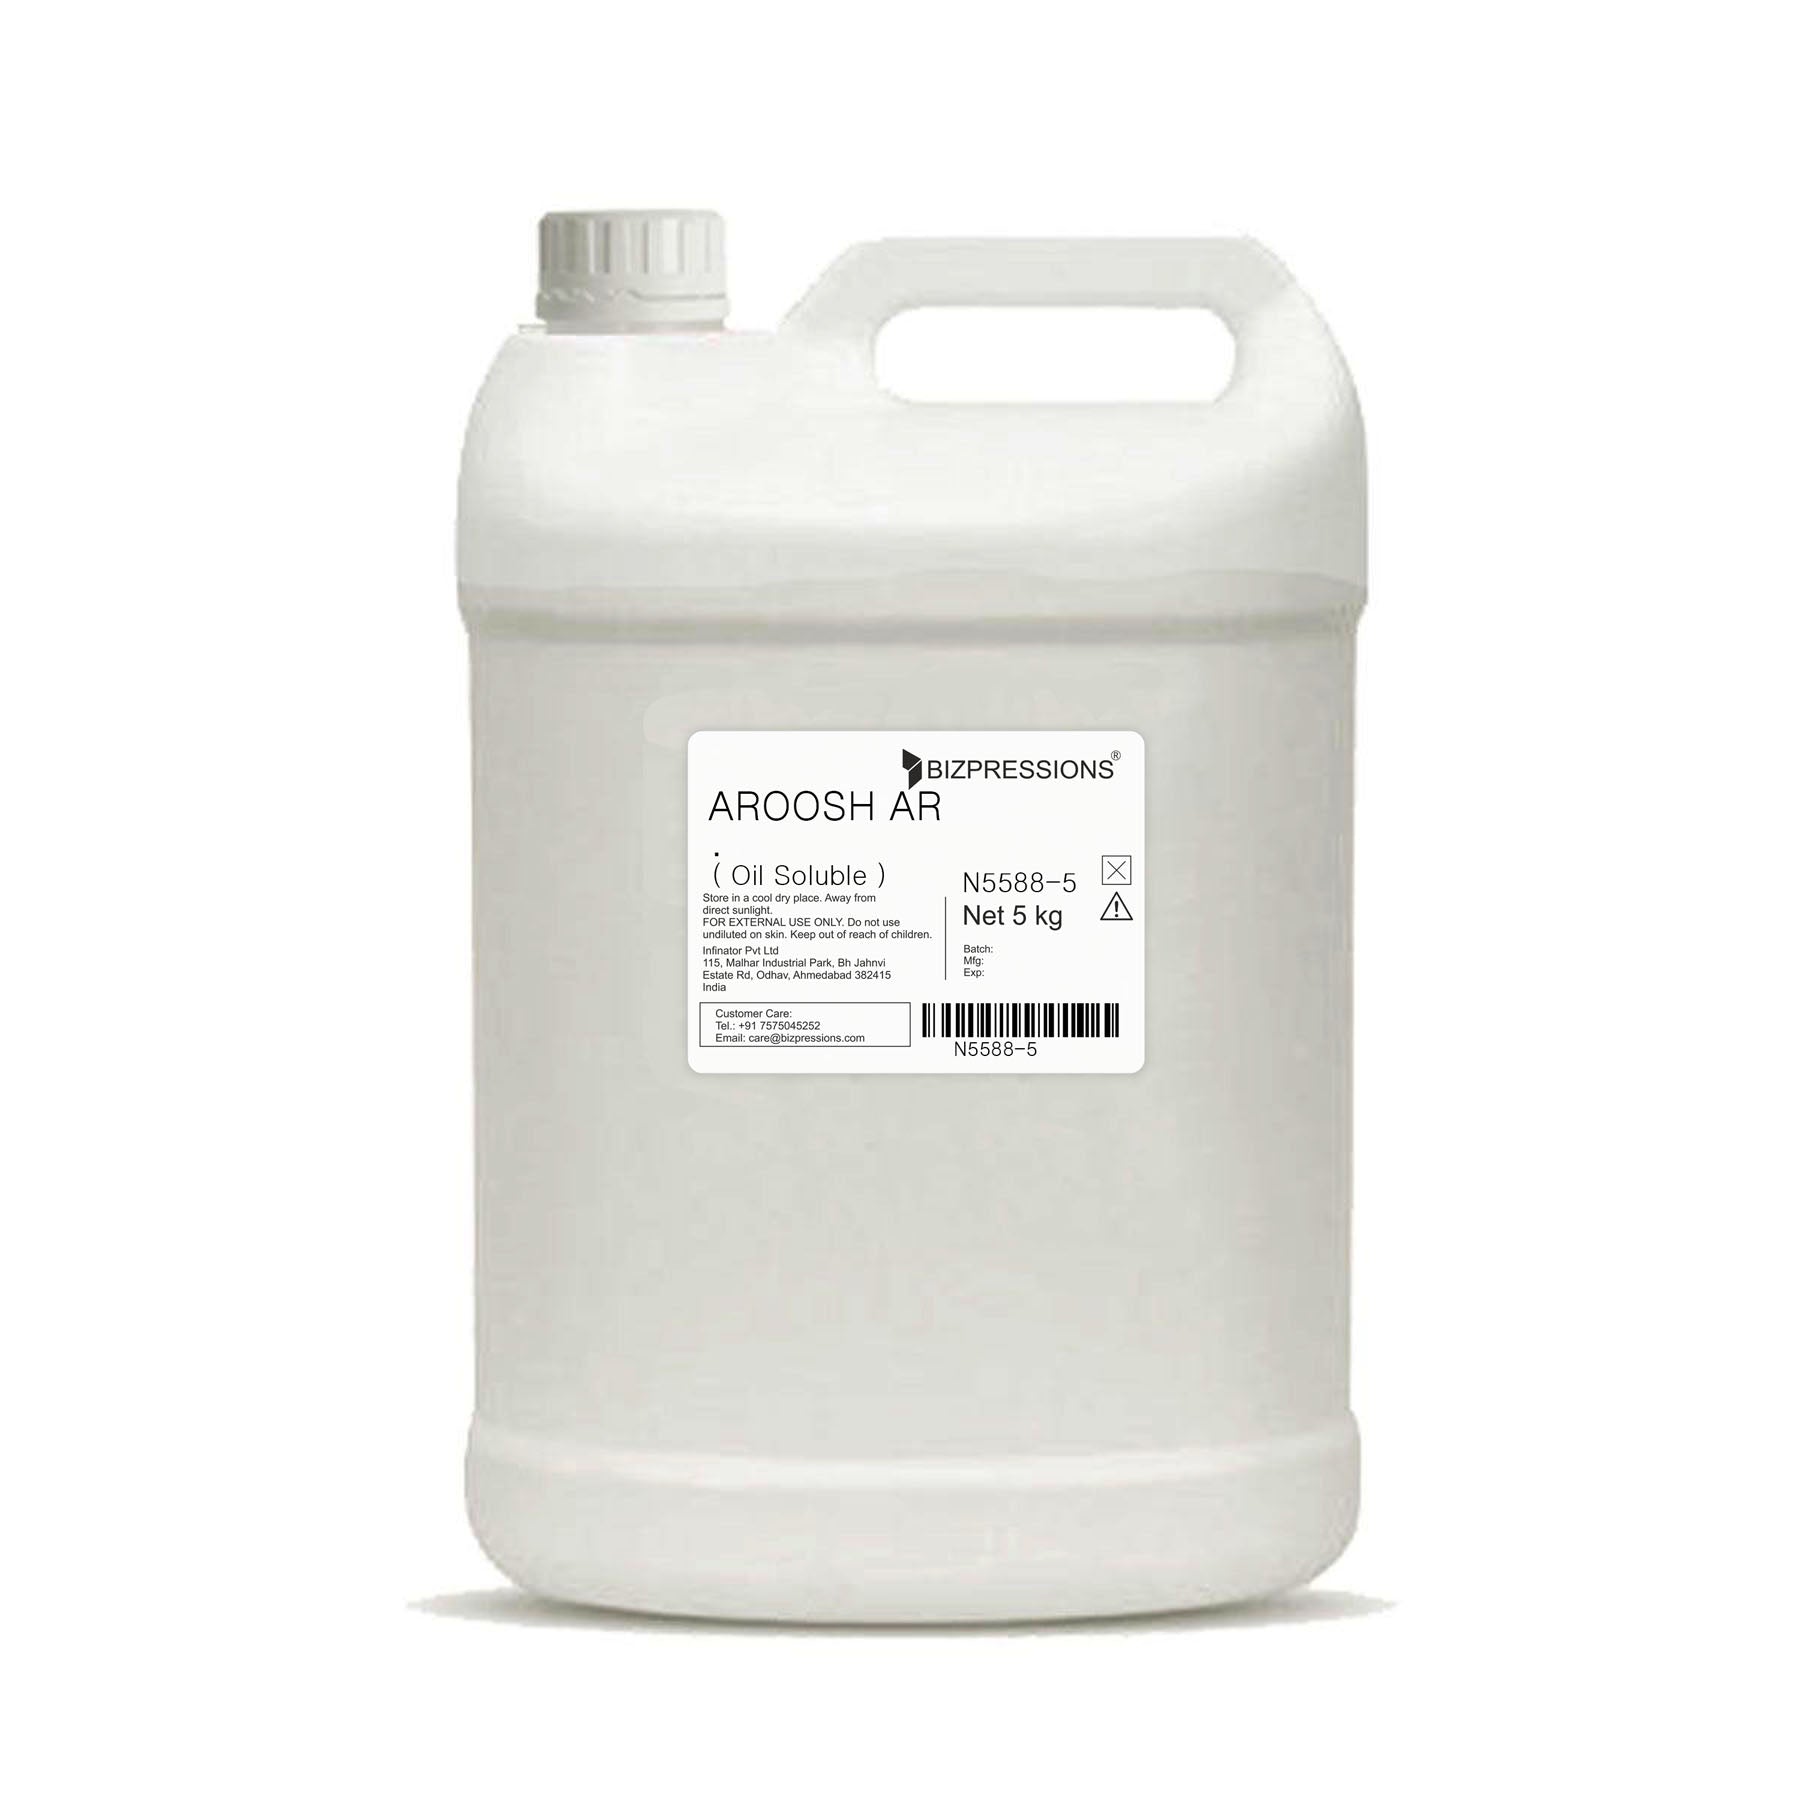 AROOSH AR - Fragrance ( Oil Soluble ) - 5 kg